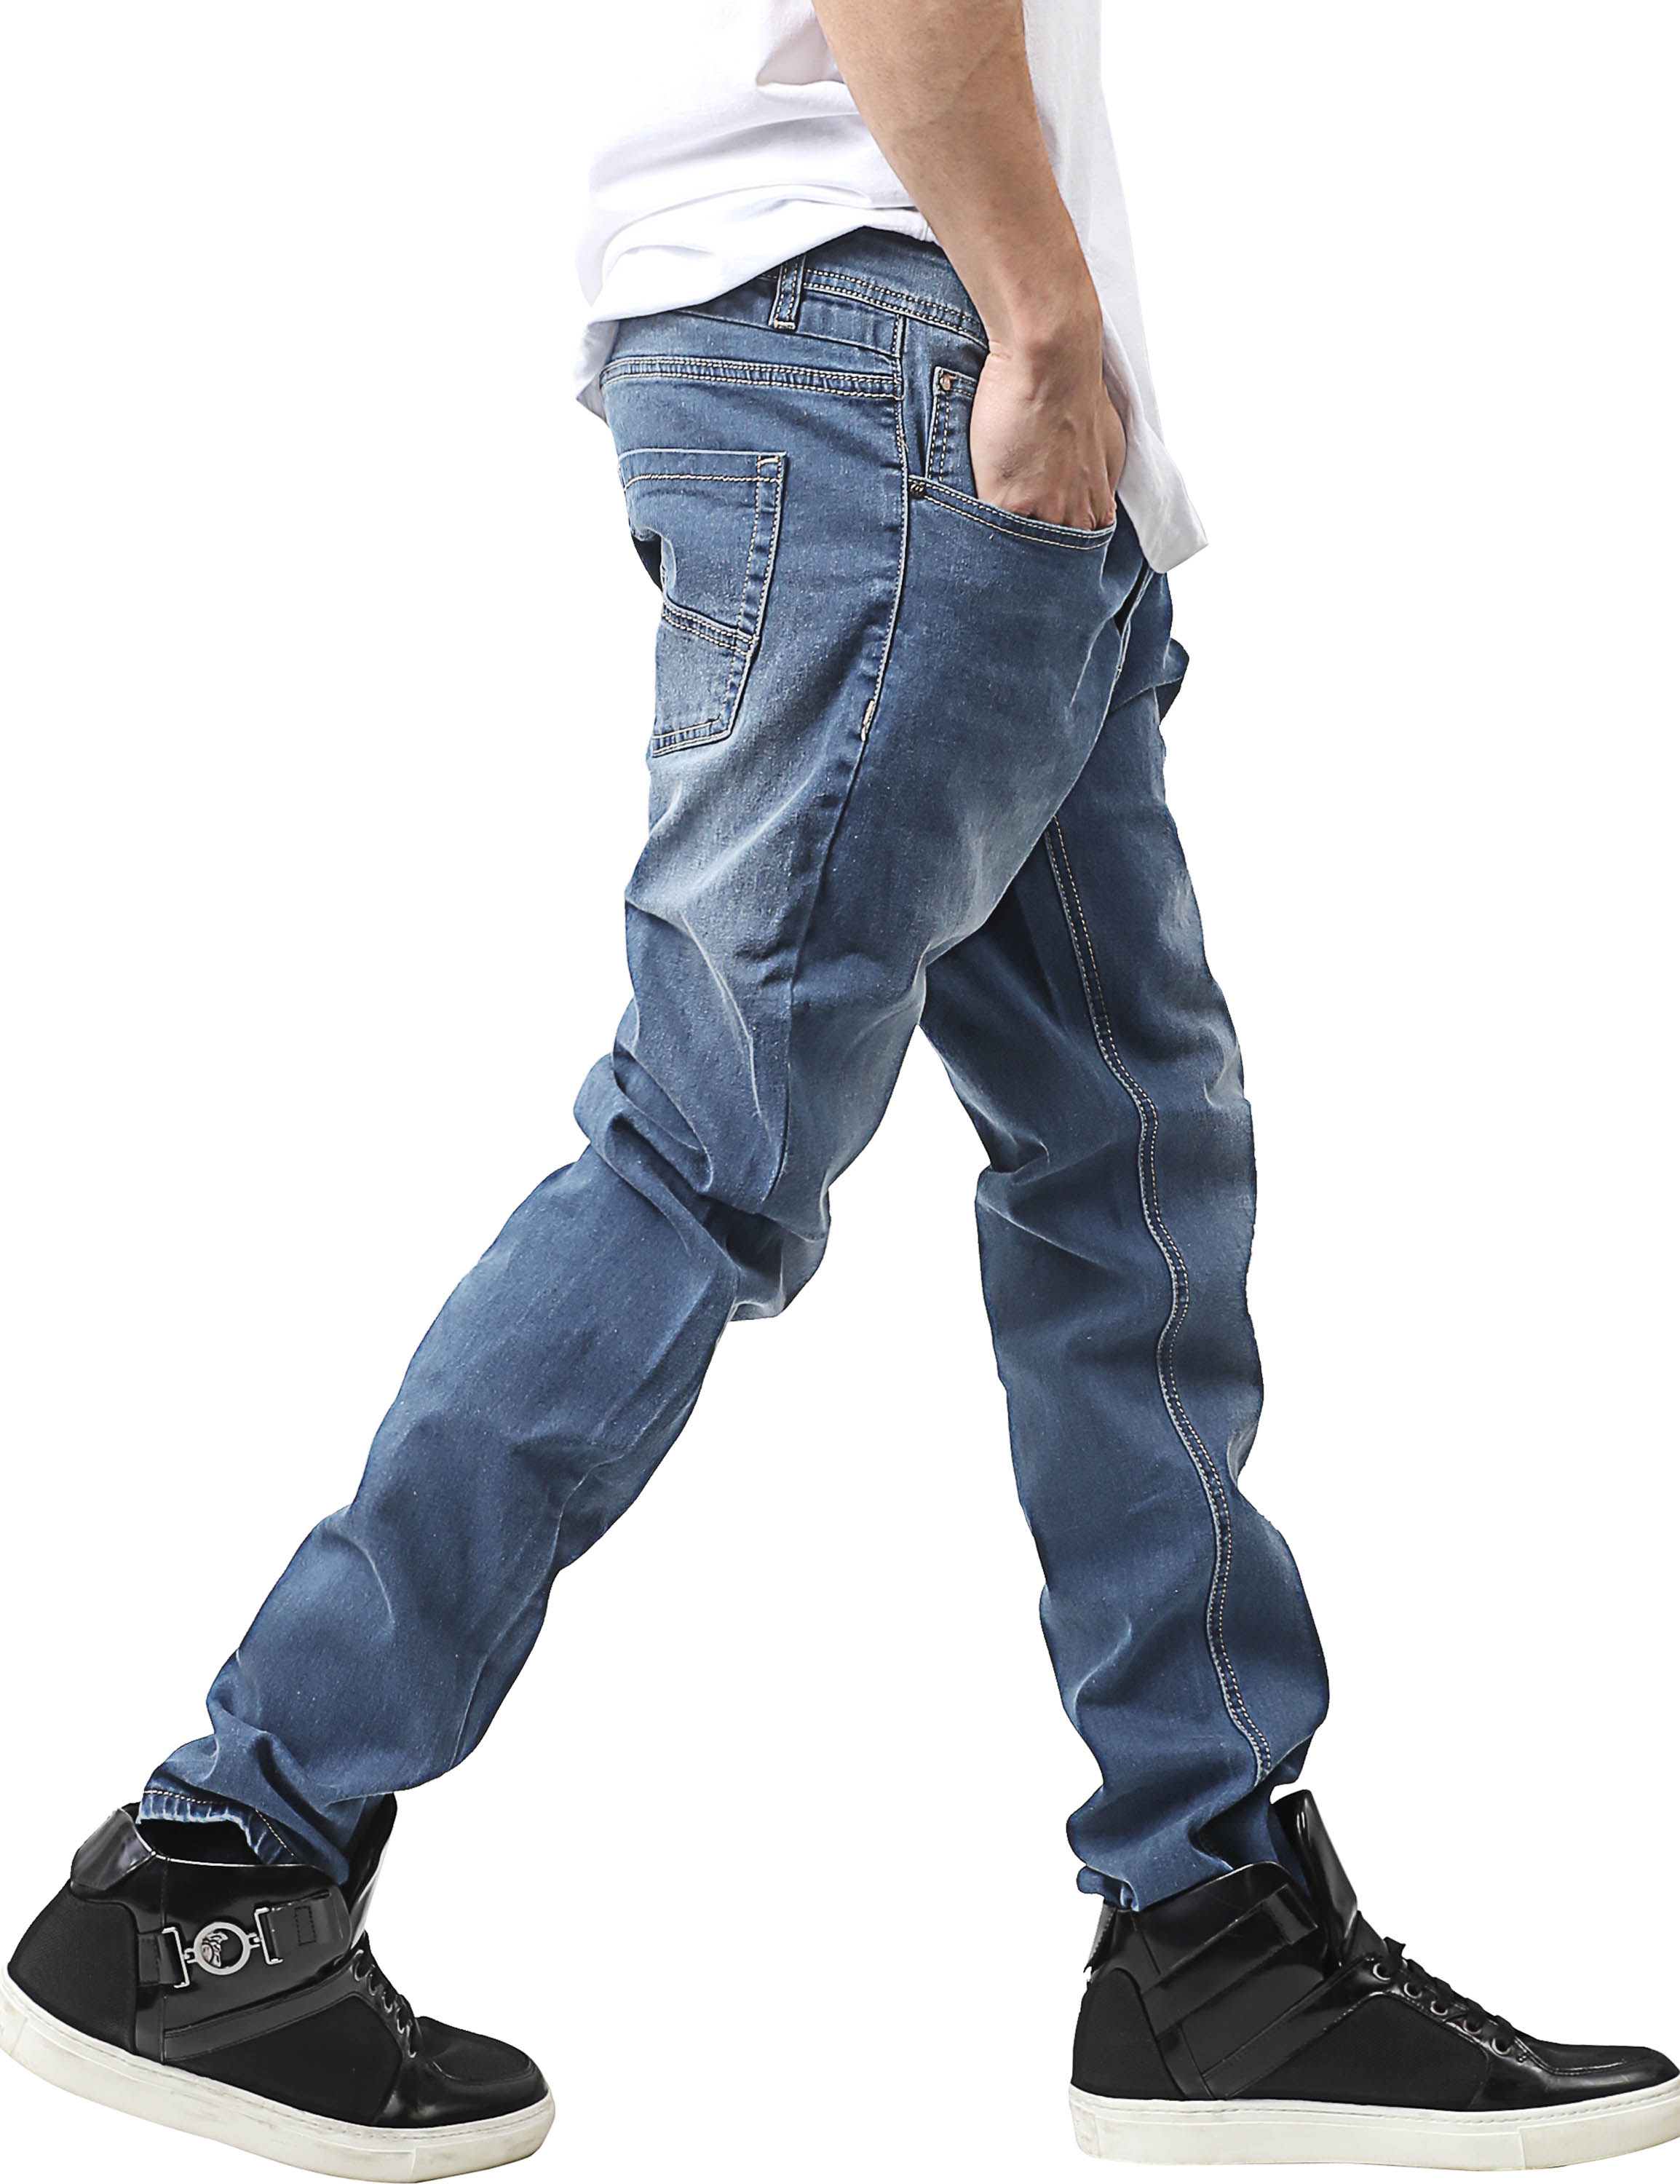 Mens Skinny Jeans Stretch Skinny Fit Slim Denim Pants - image 3 of 4